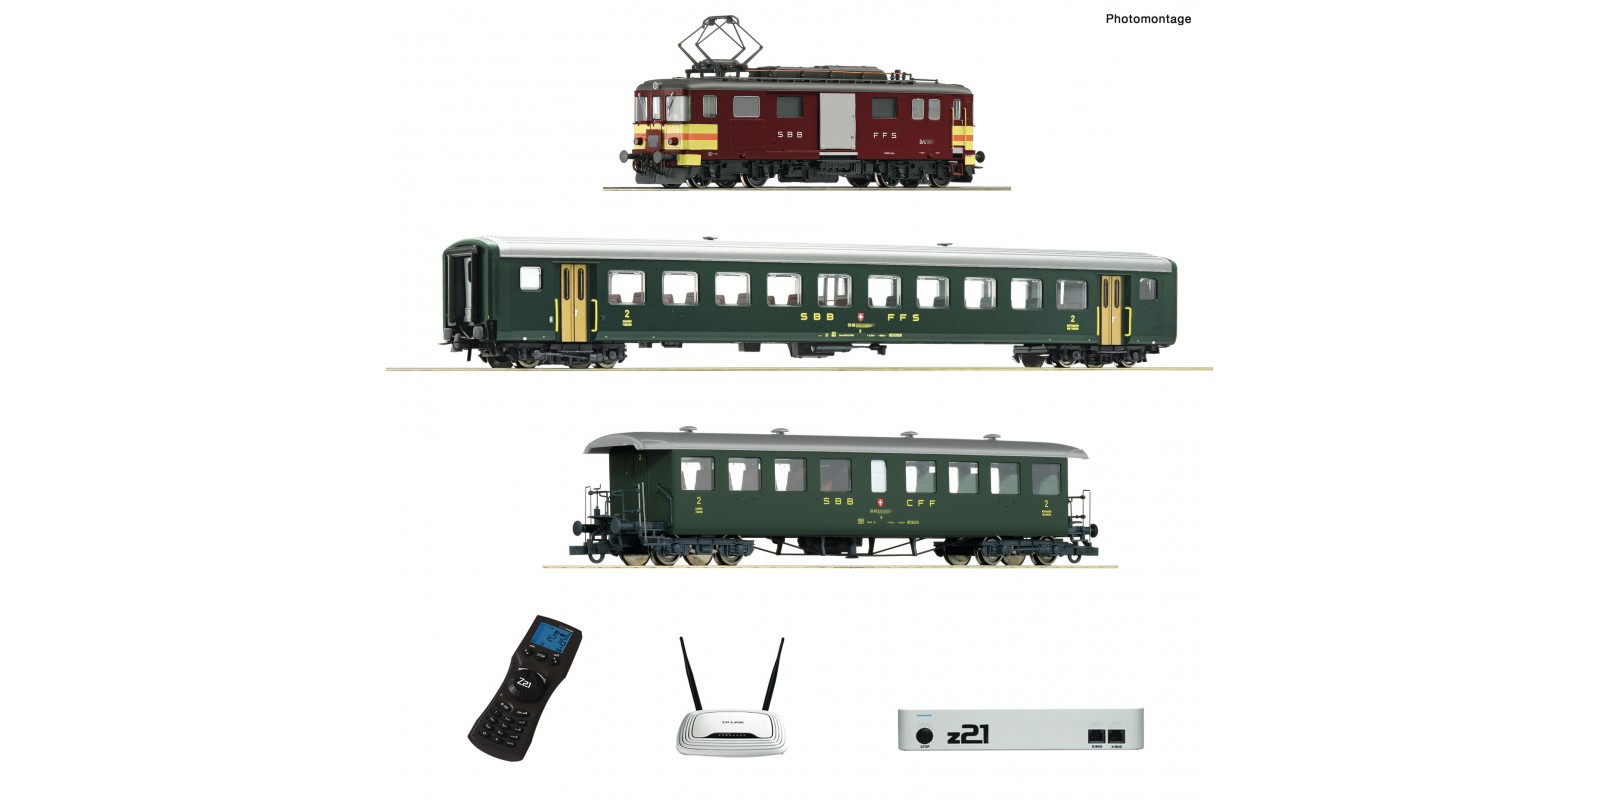 RO51339 z21 digital set: Electric luggage railcar De 4/4 with passenger train